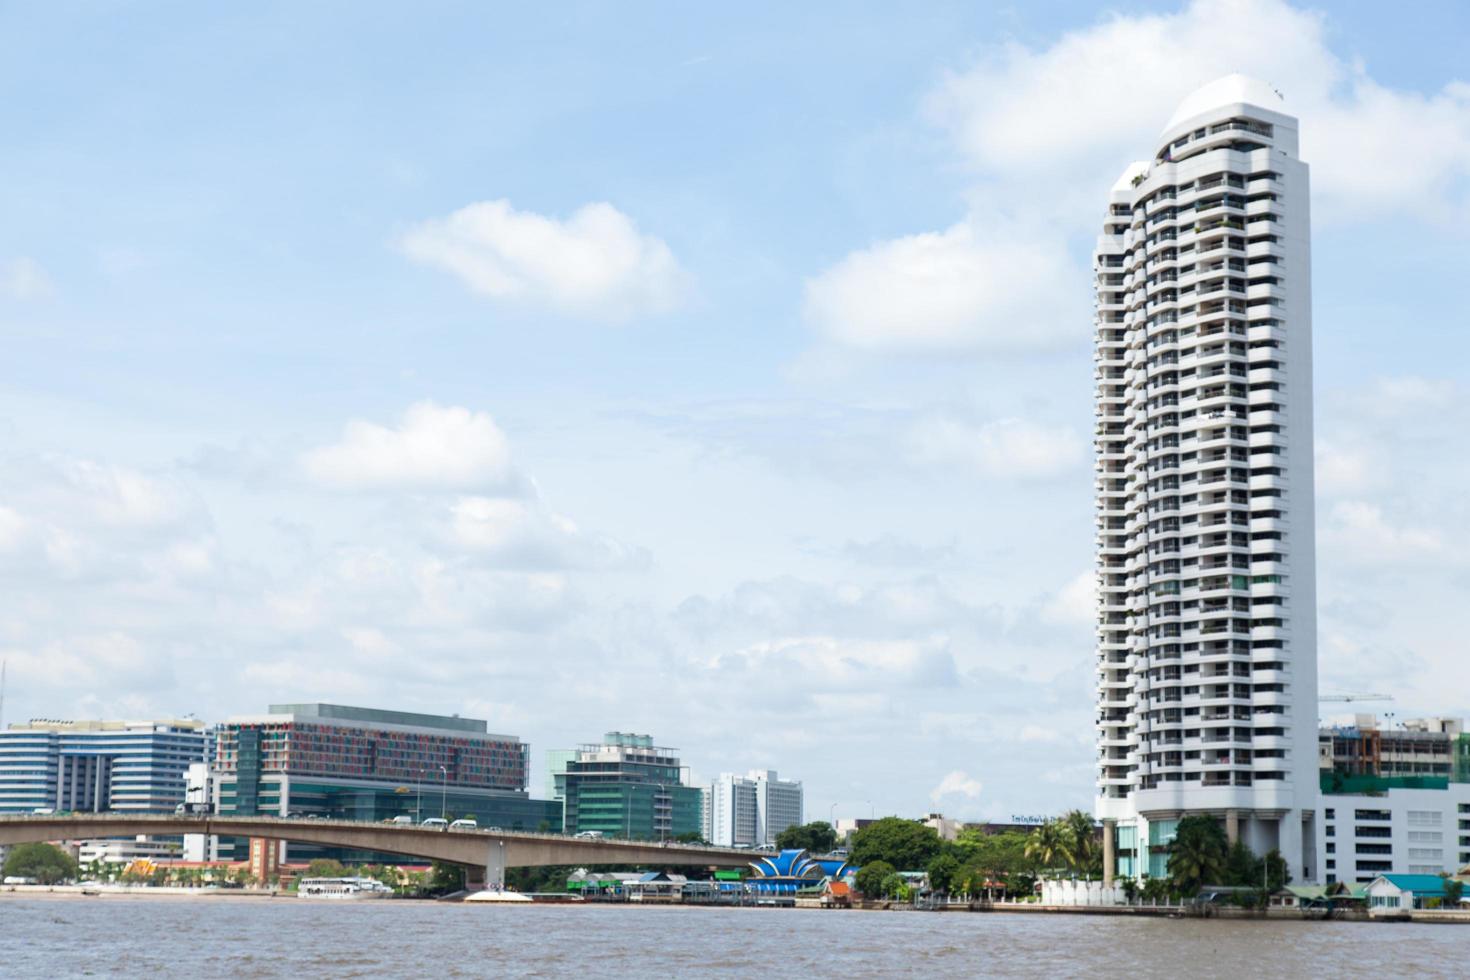 Buildings along the river in Bangkok photo